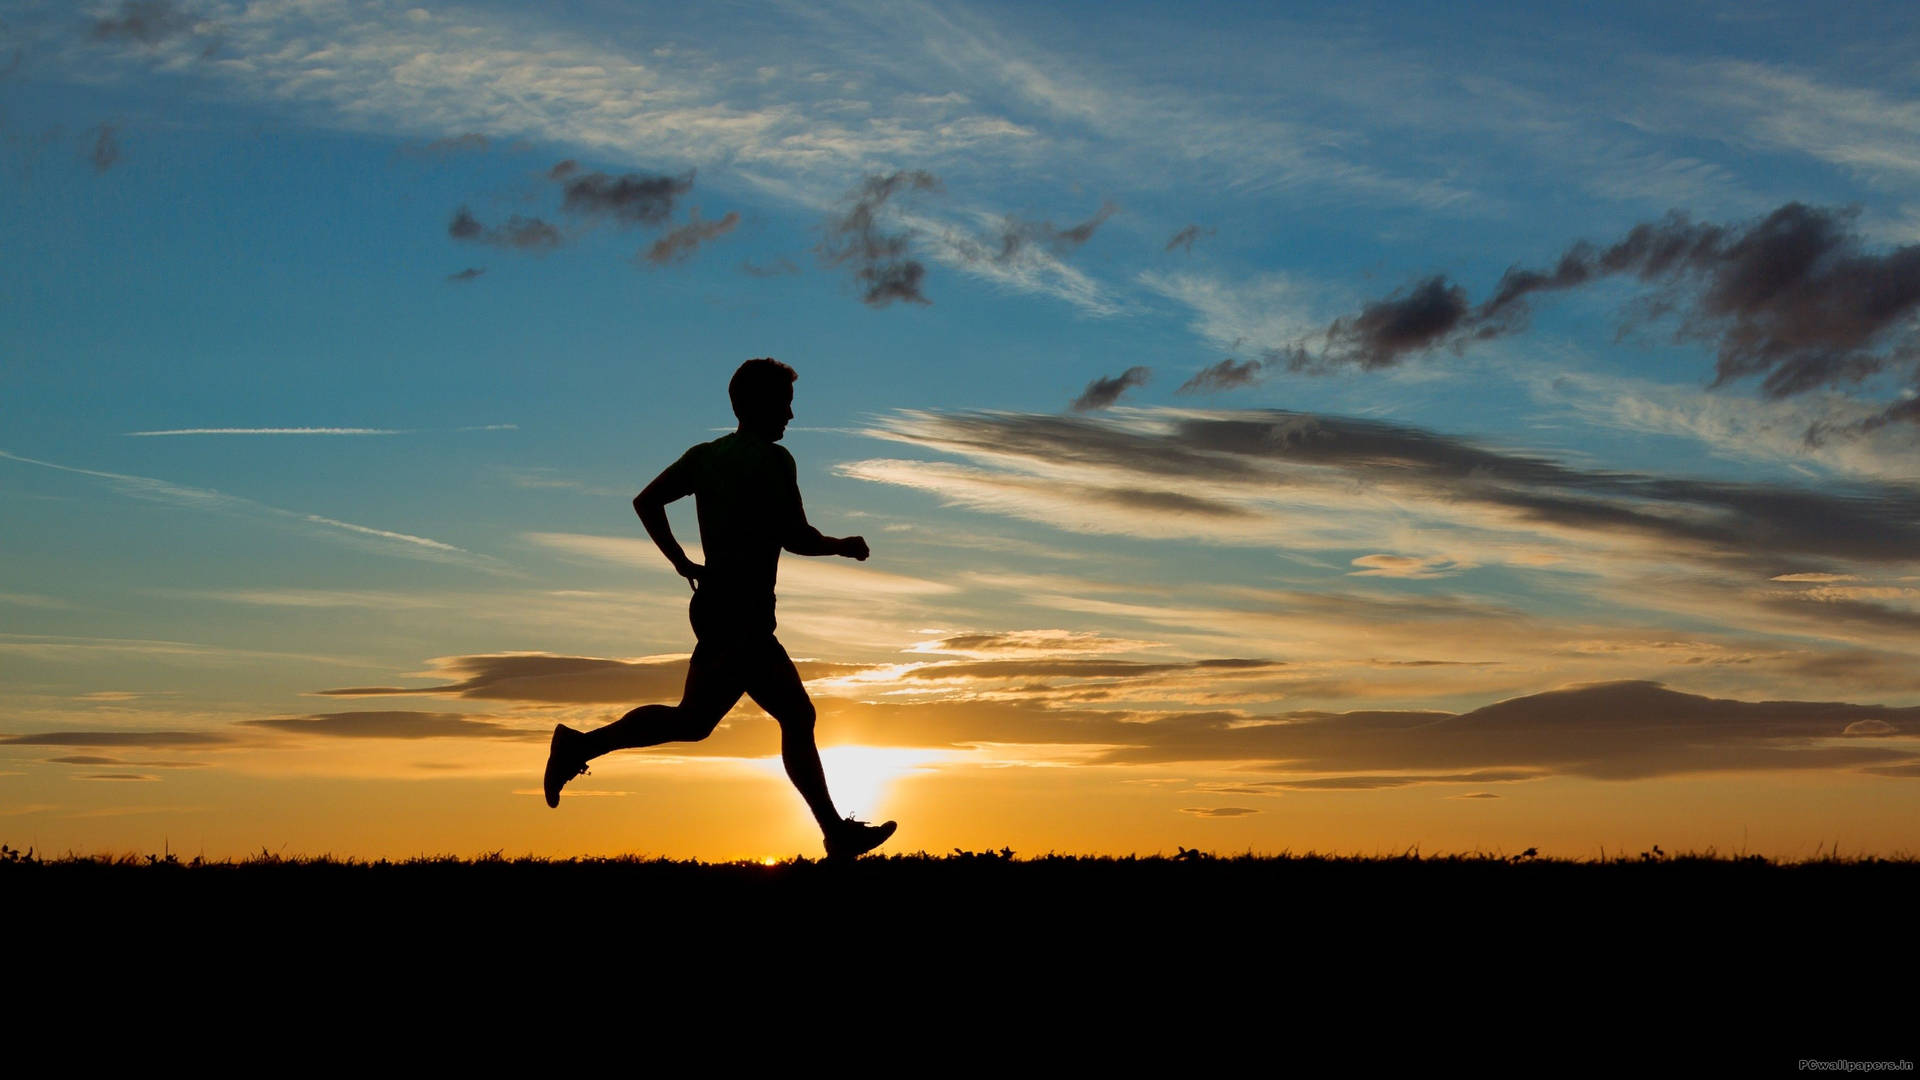 Atlet Silhouette Marathon Wallpaper